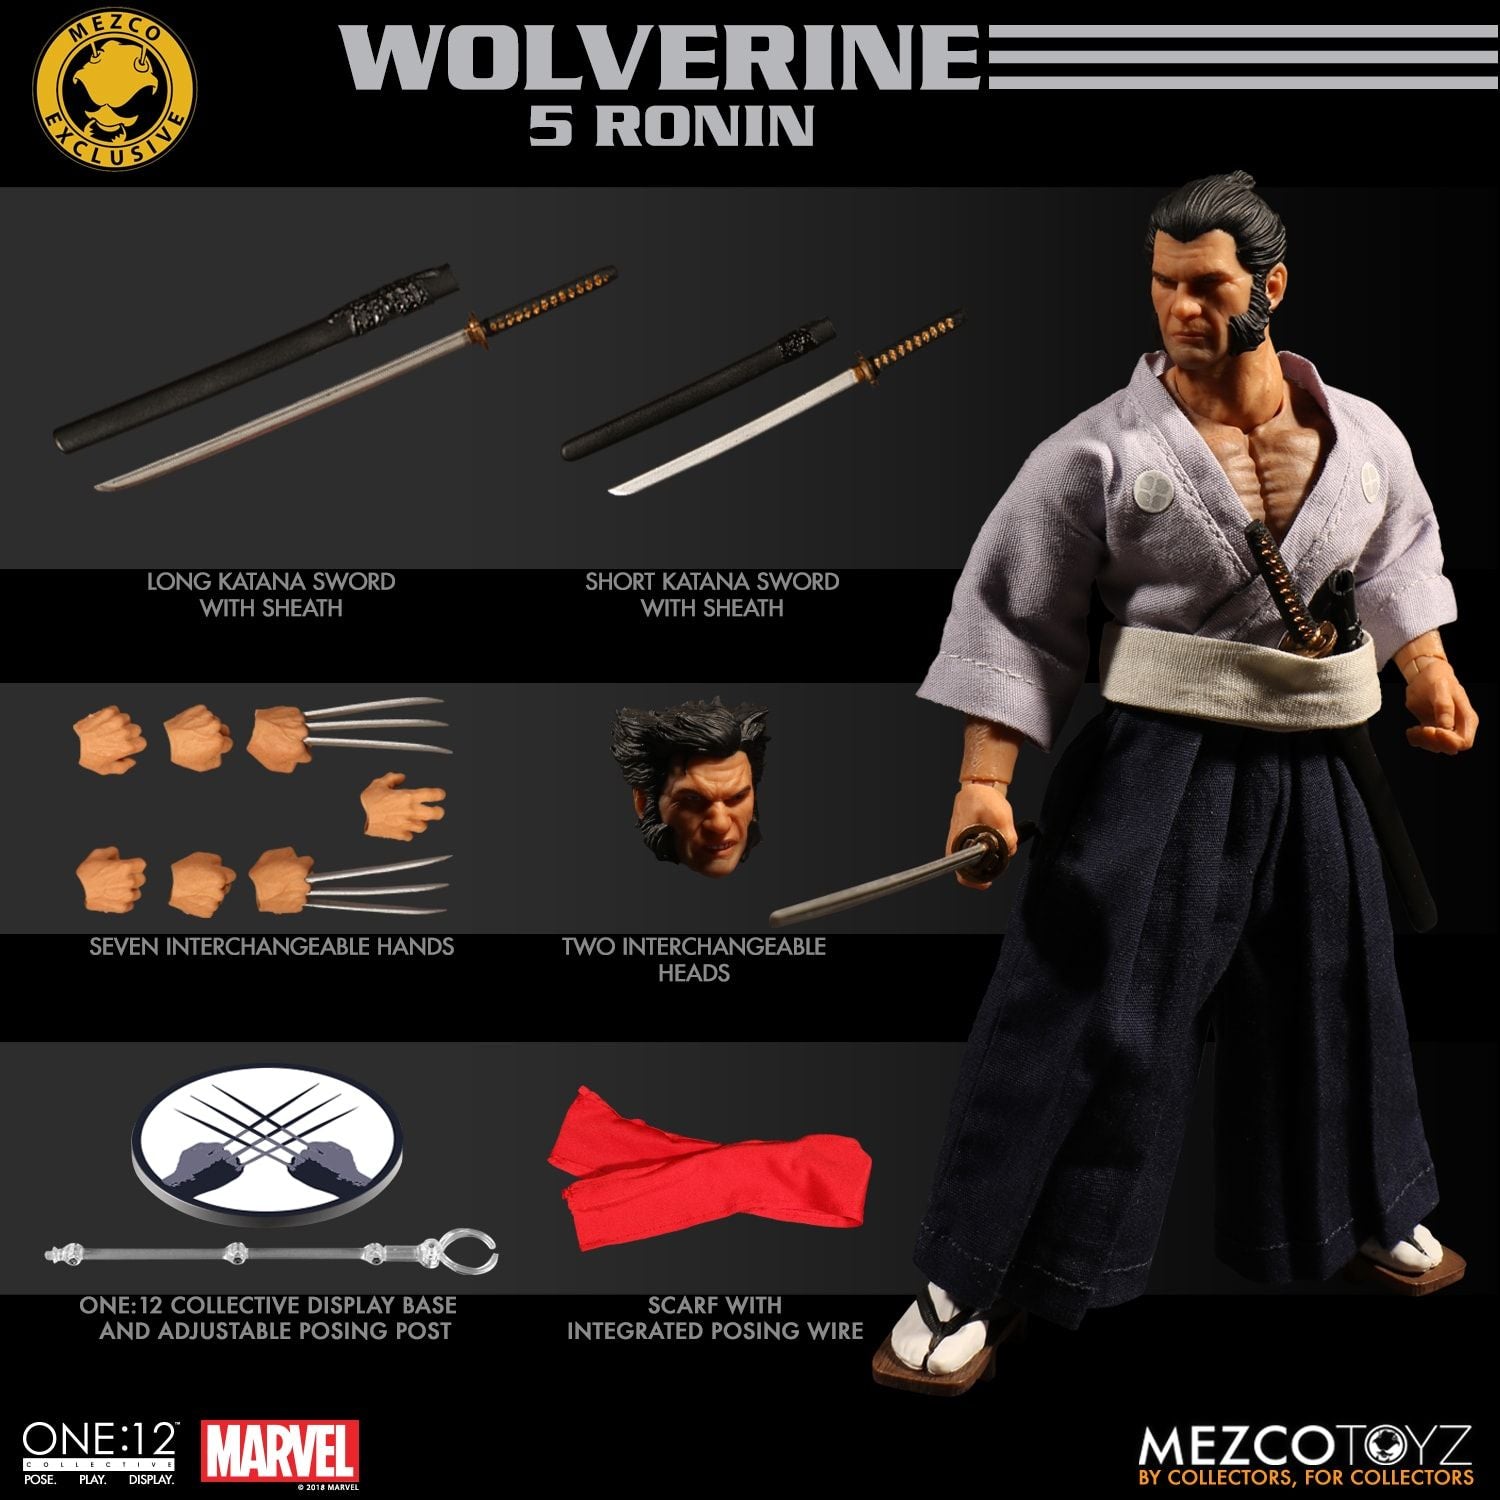 Mezco Toyz ONE:12 Collective: Wolverine 5 Ronin Action Figure